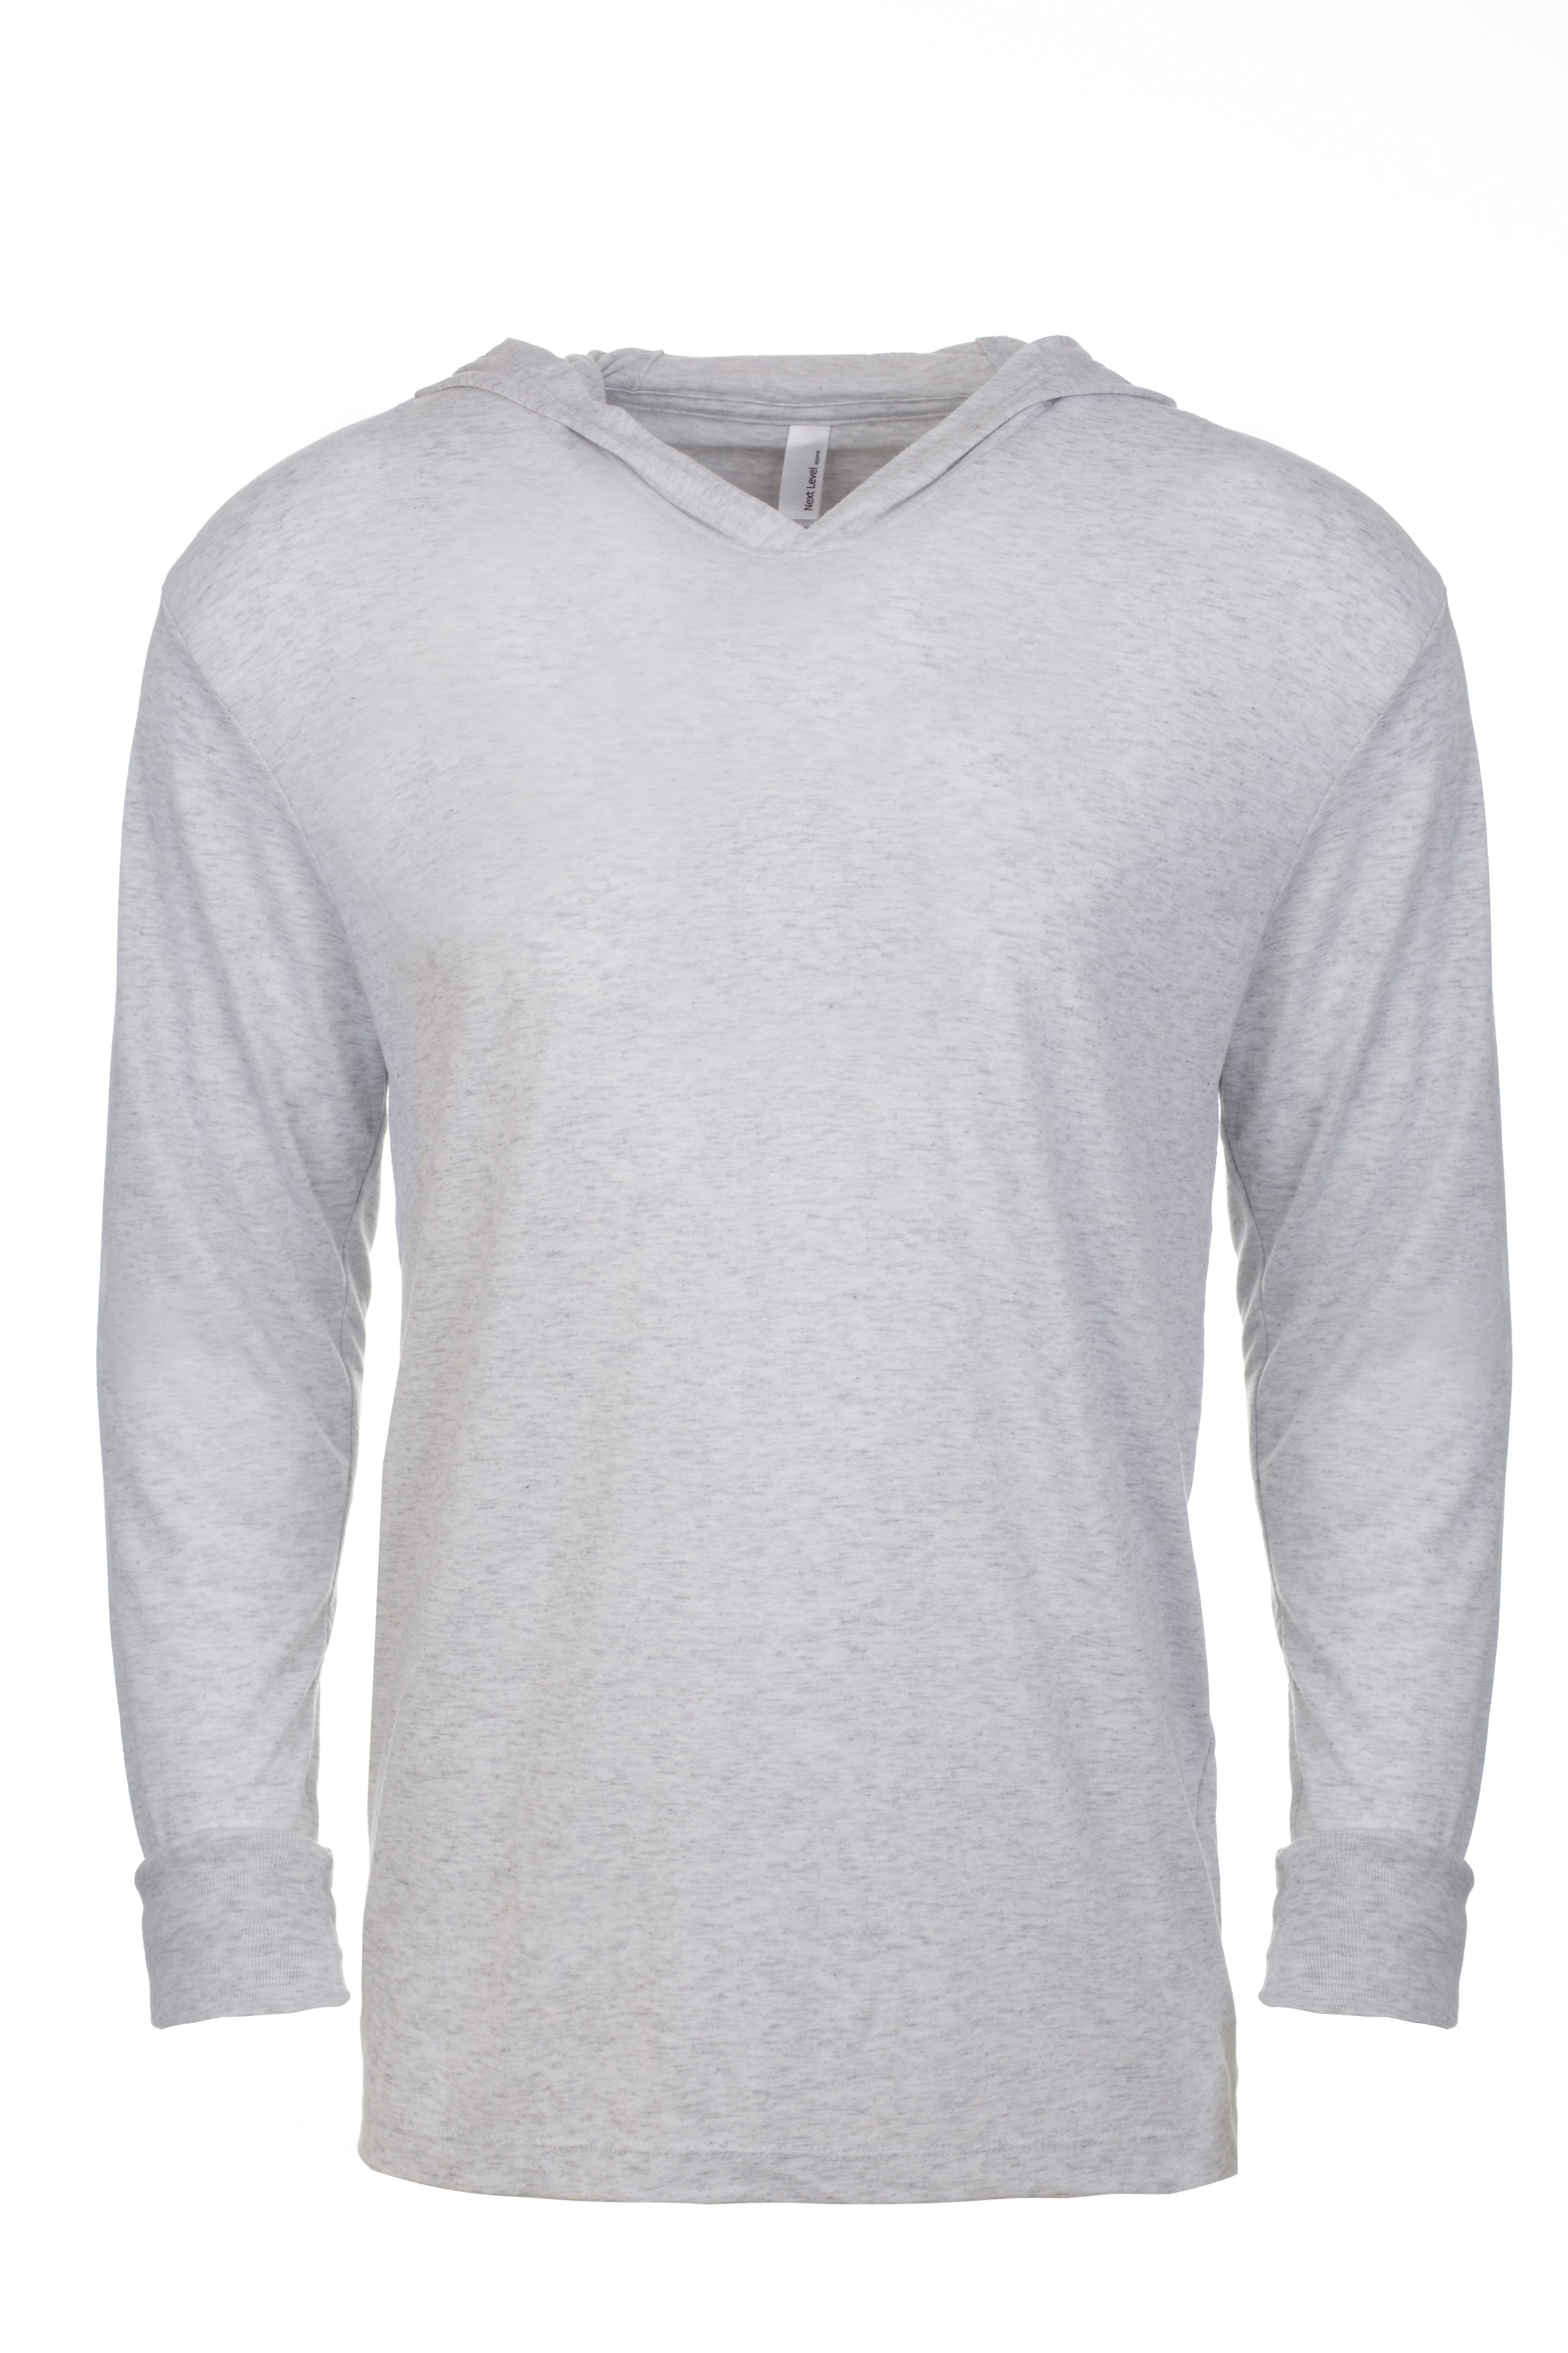 Next Level Apparel® 6021 Unisex Tri-Blend Long Sleeve Hoodie T-Shirt